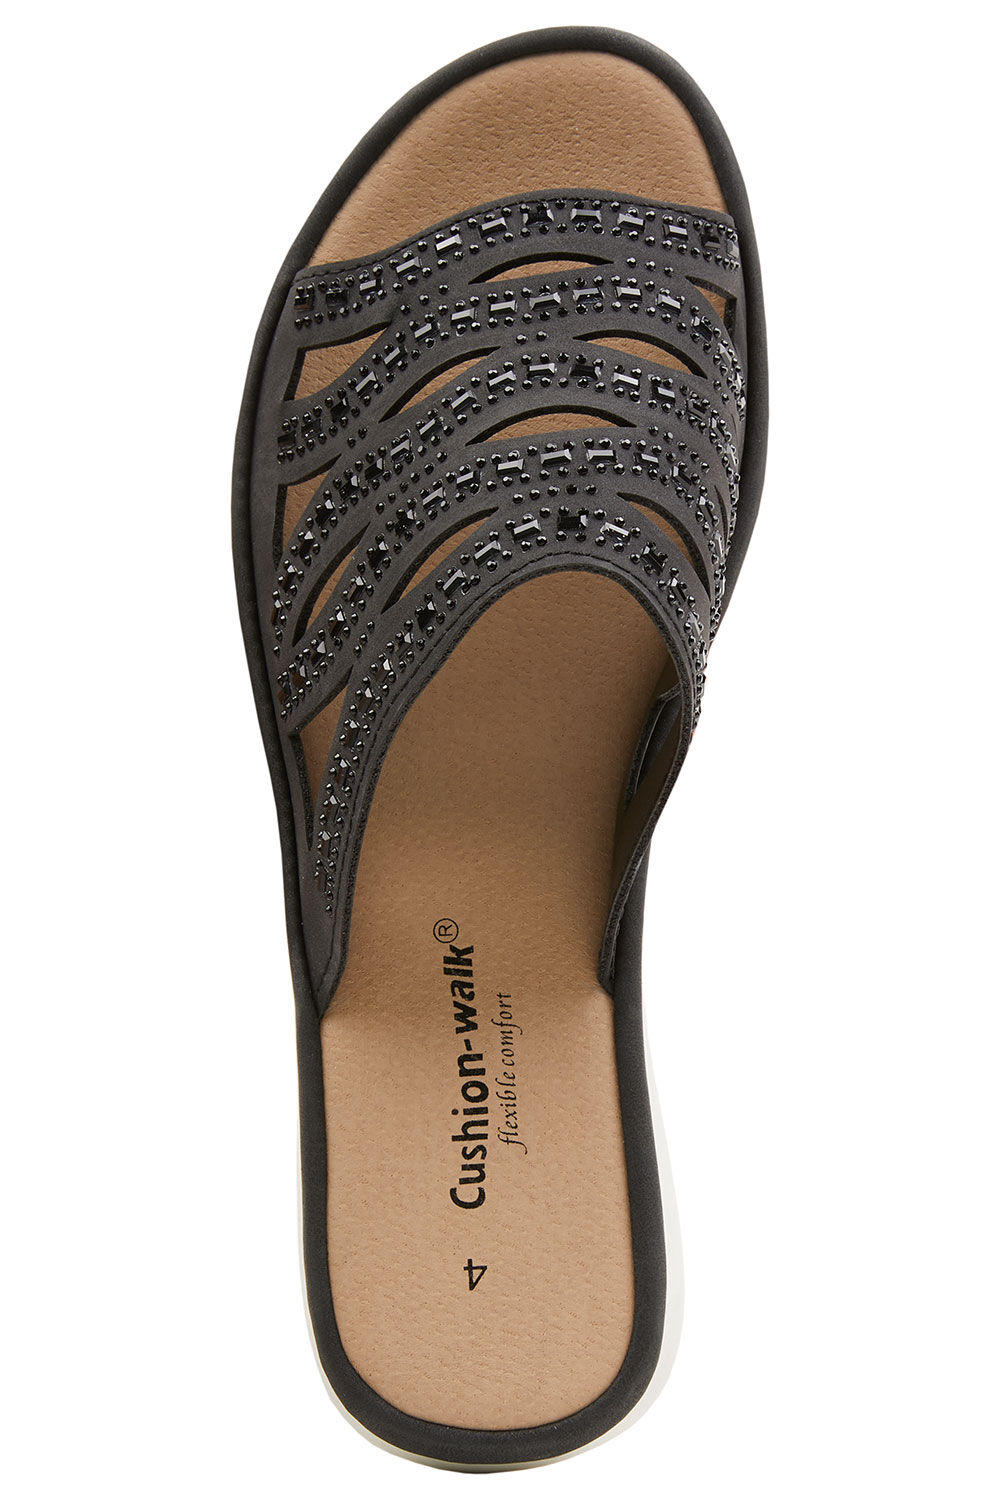 Cushion Walk Ladies Mid Wedge Sandals Tbar Slip On Mule Summer Sandal | eBay